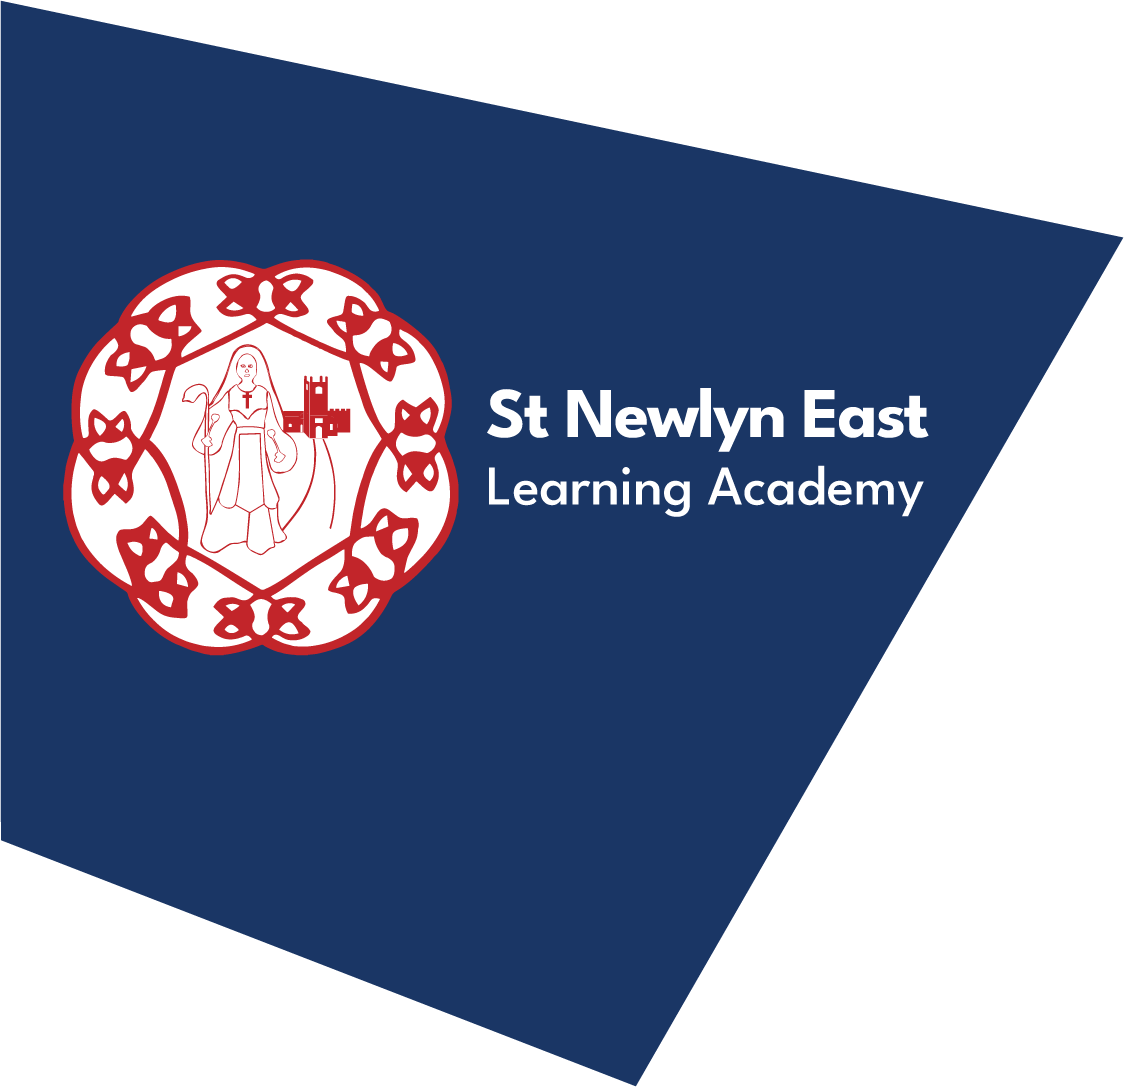 St Newlyn East Learning Academy